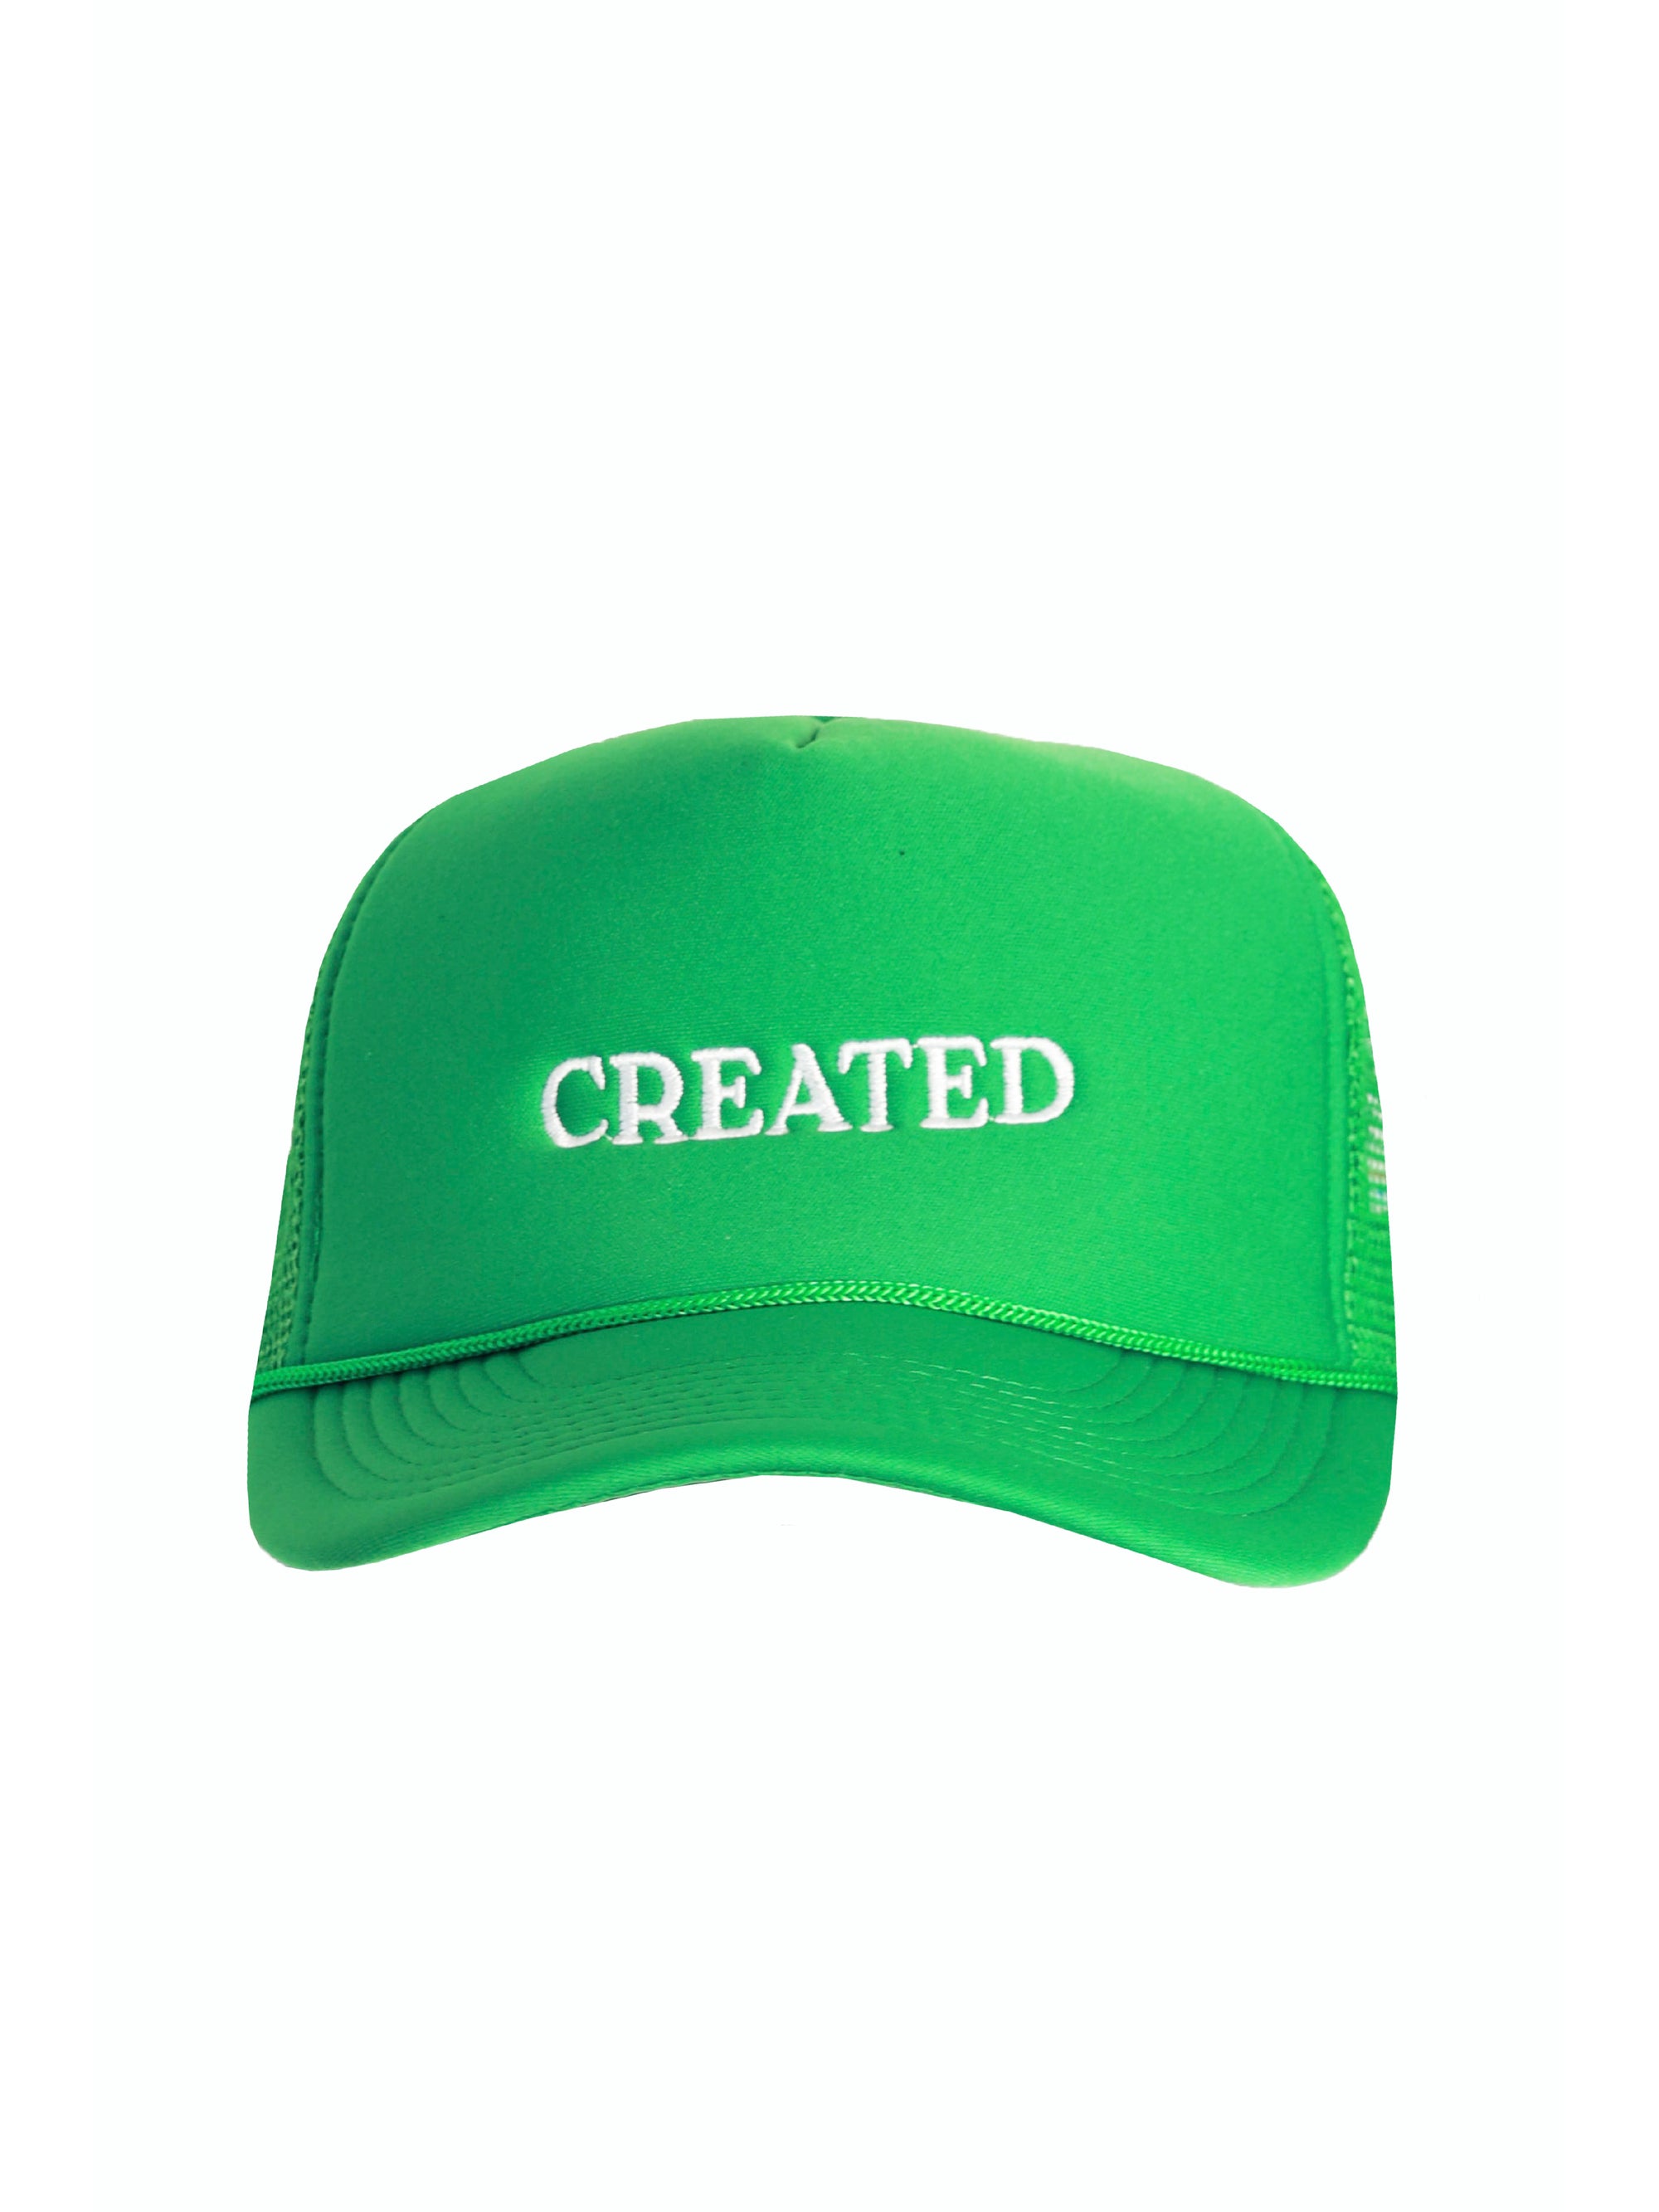 Created Trucker Hat - Cadmium Green